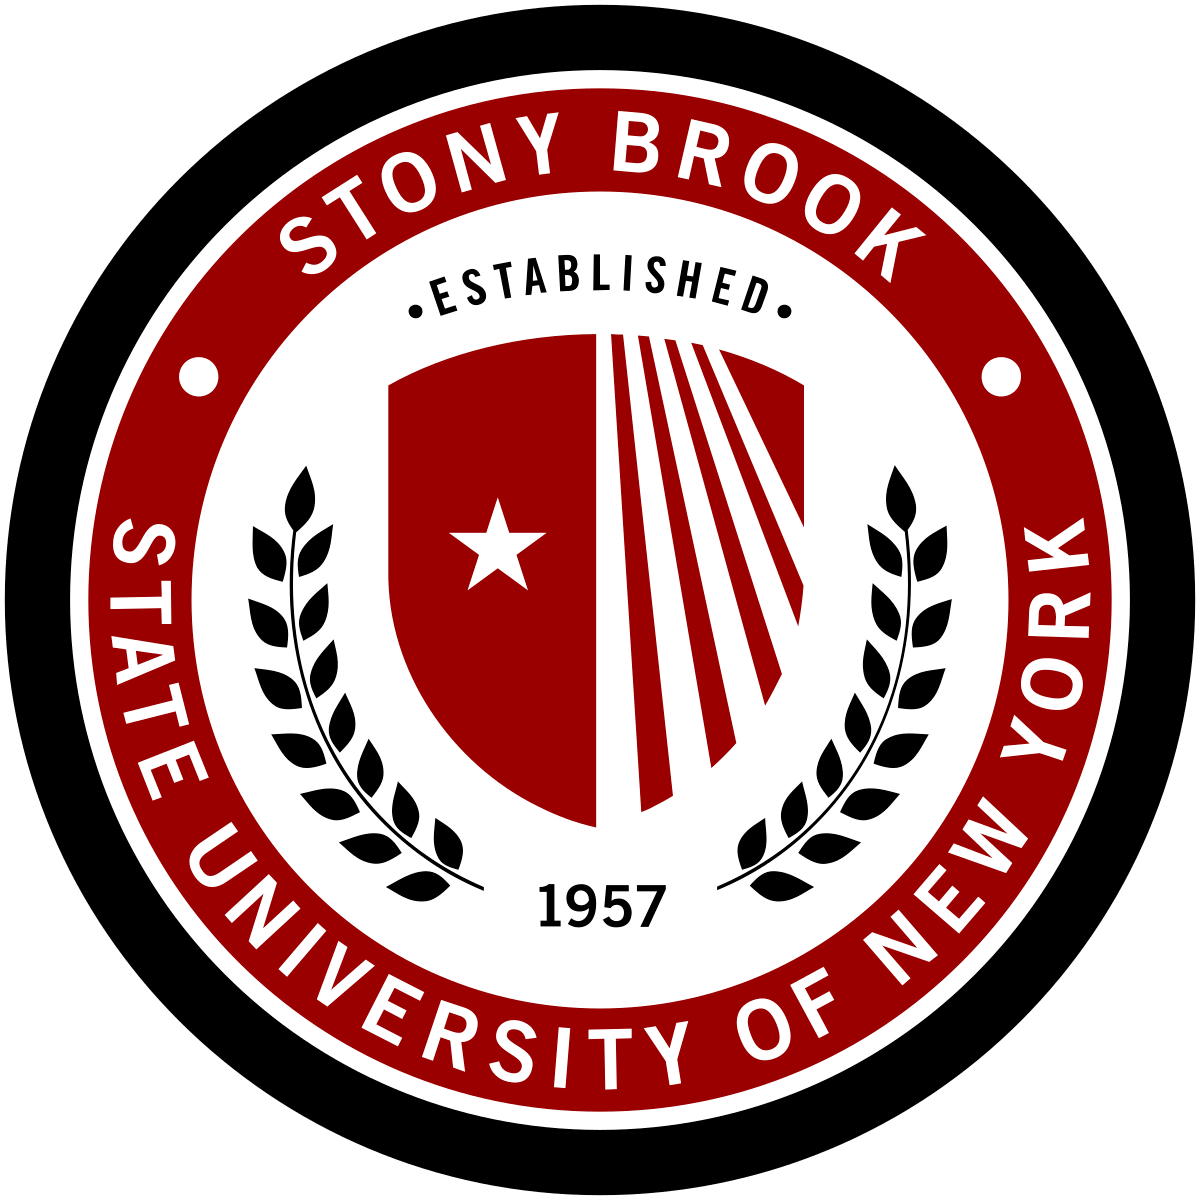 Stony Brook State University of New York